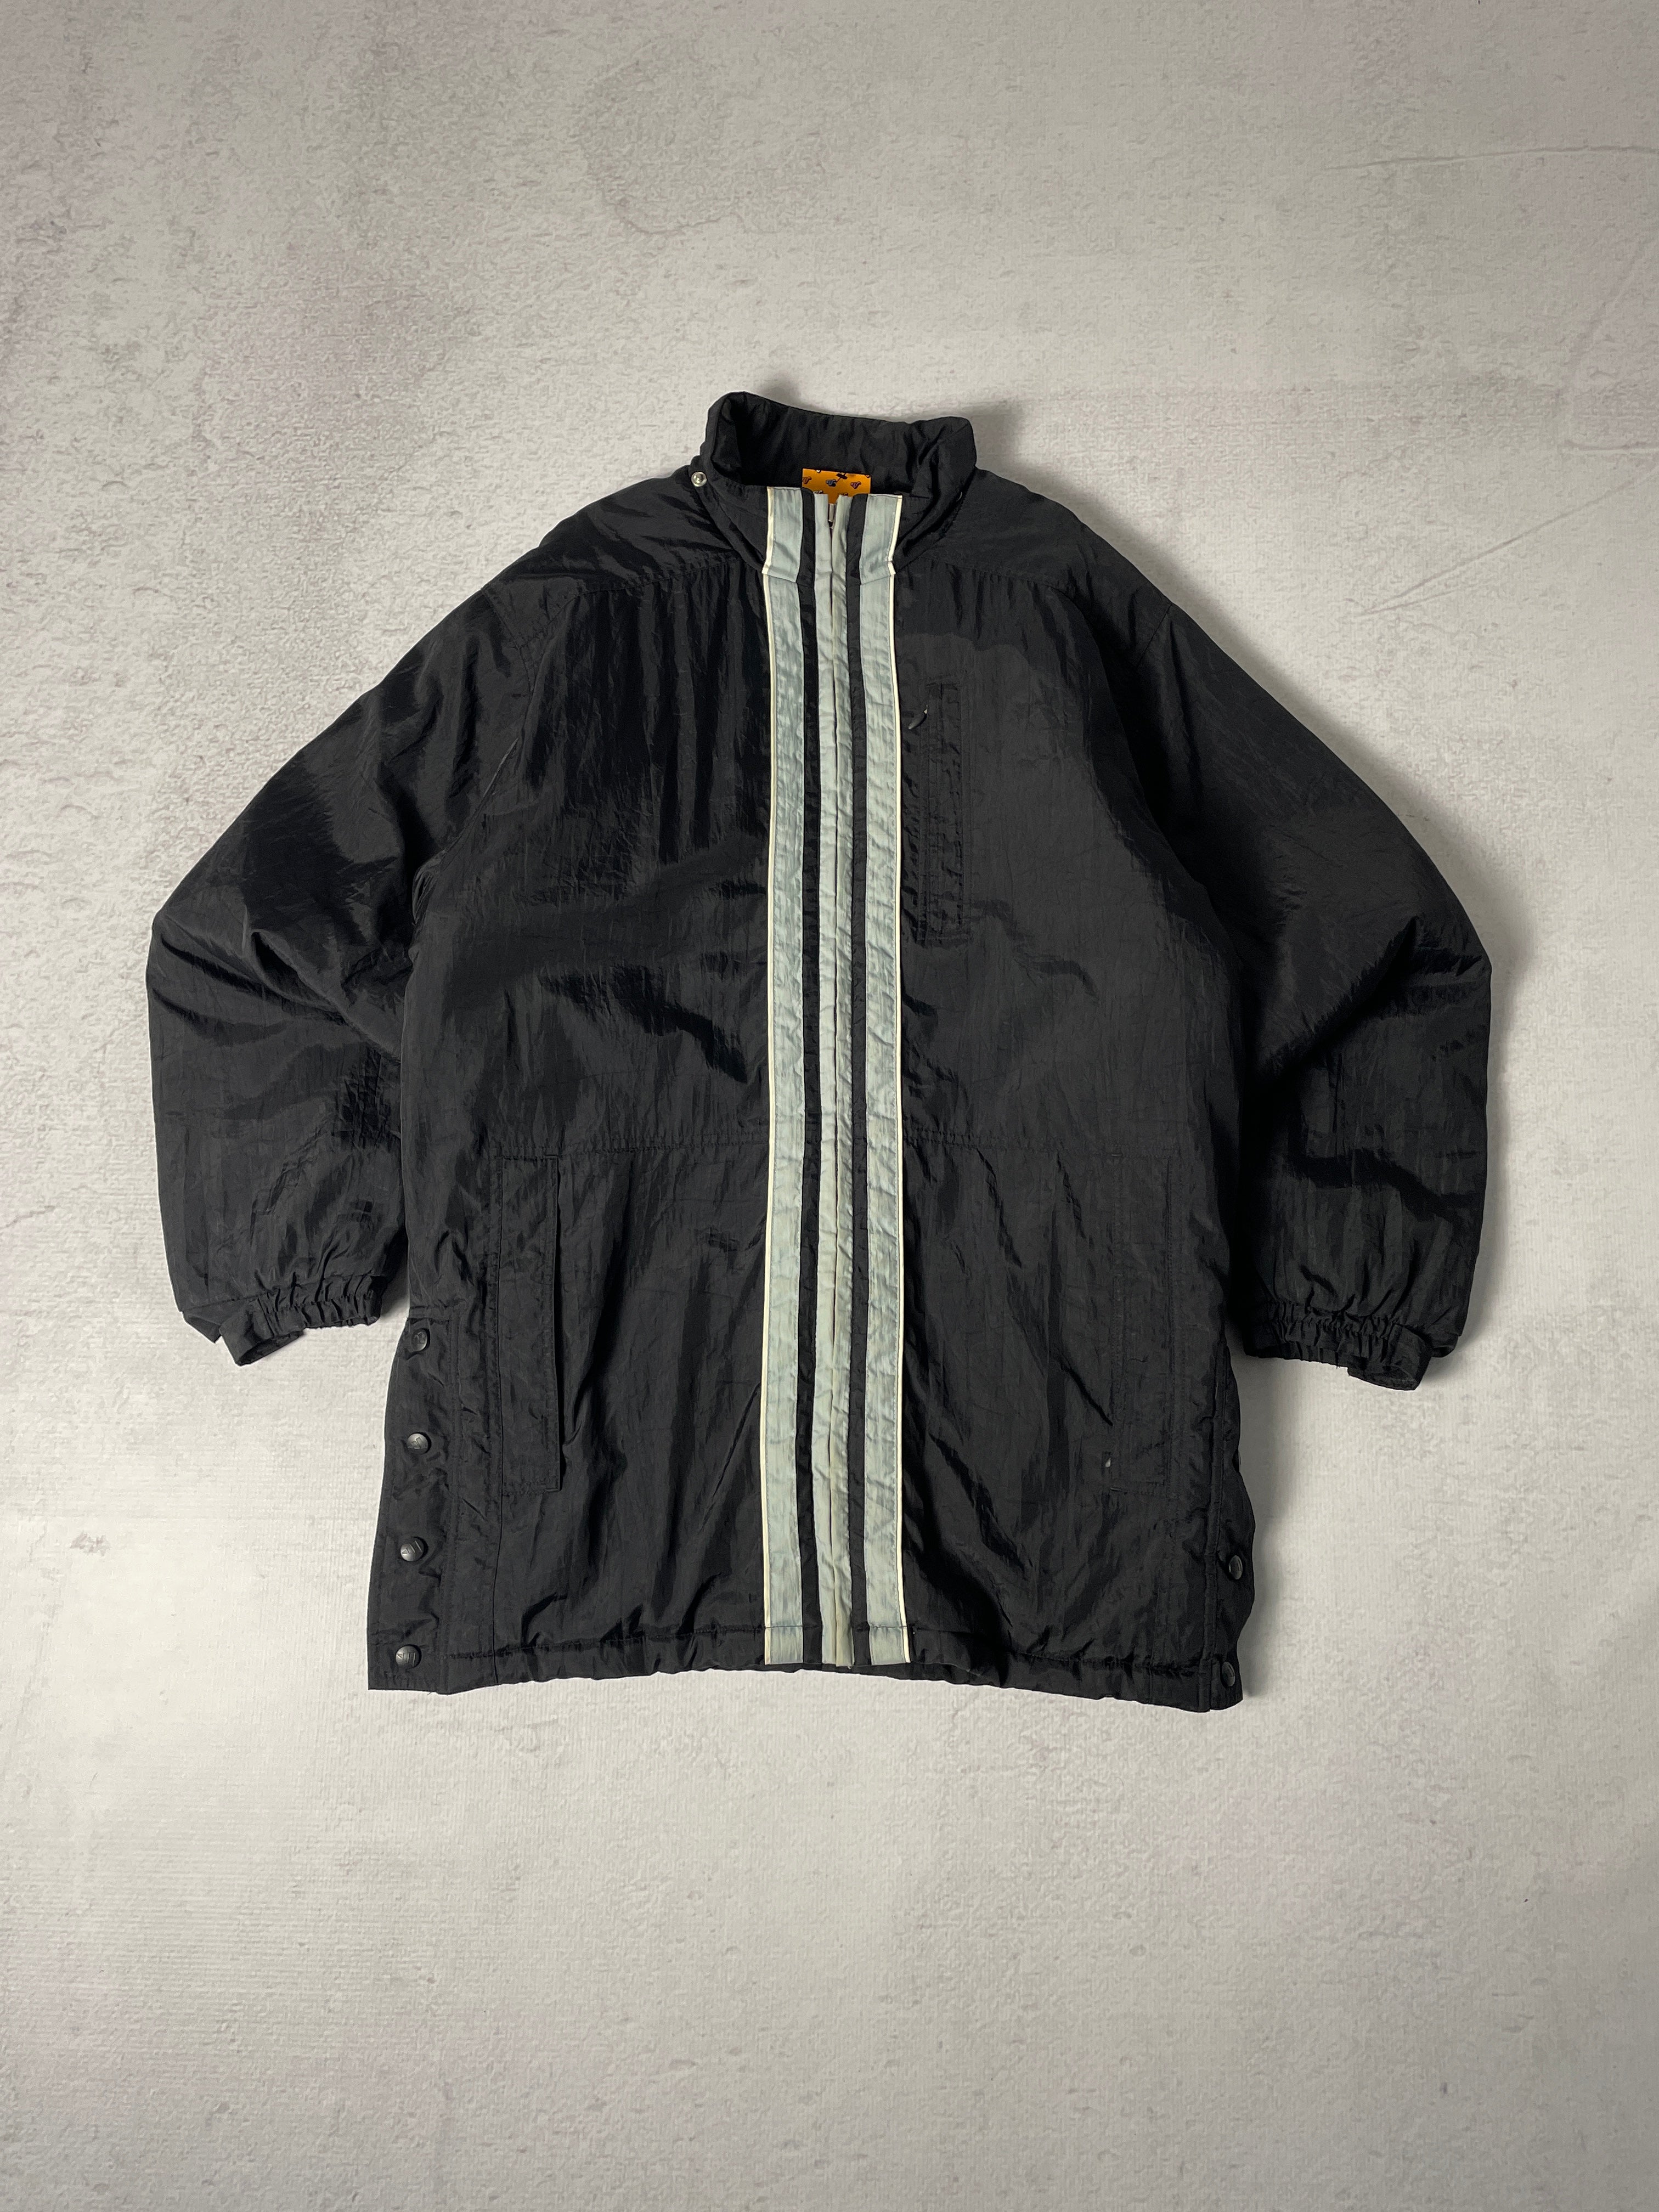 Vintage Adidas Insulated Jacket - Men's XL